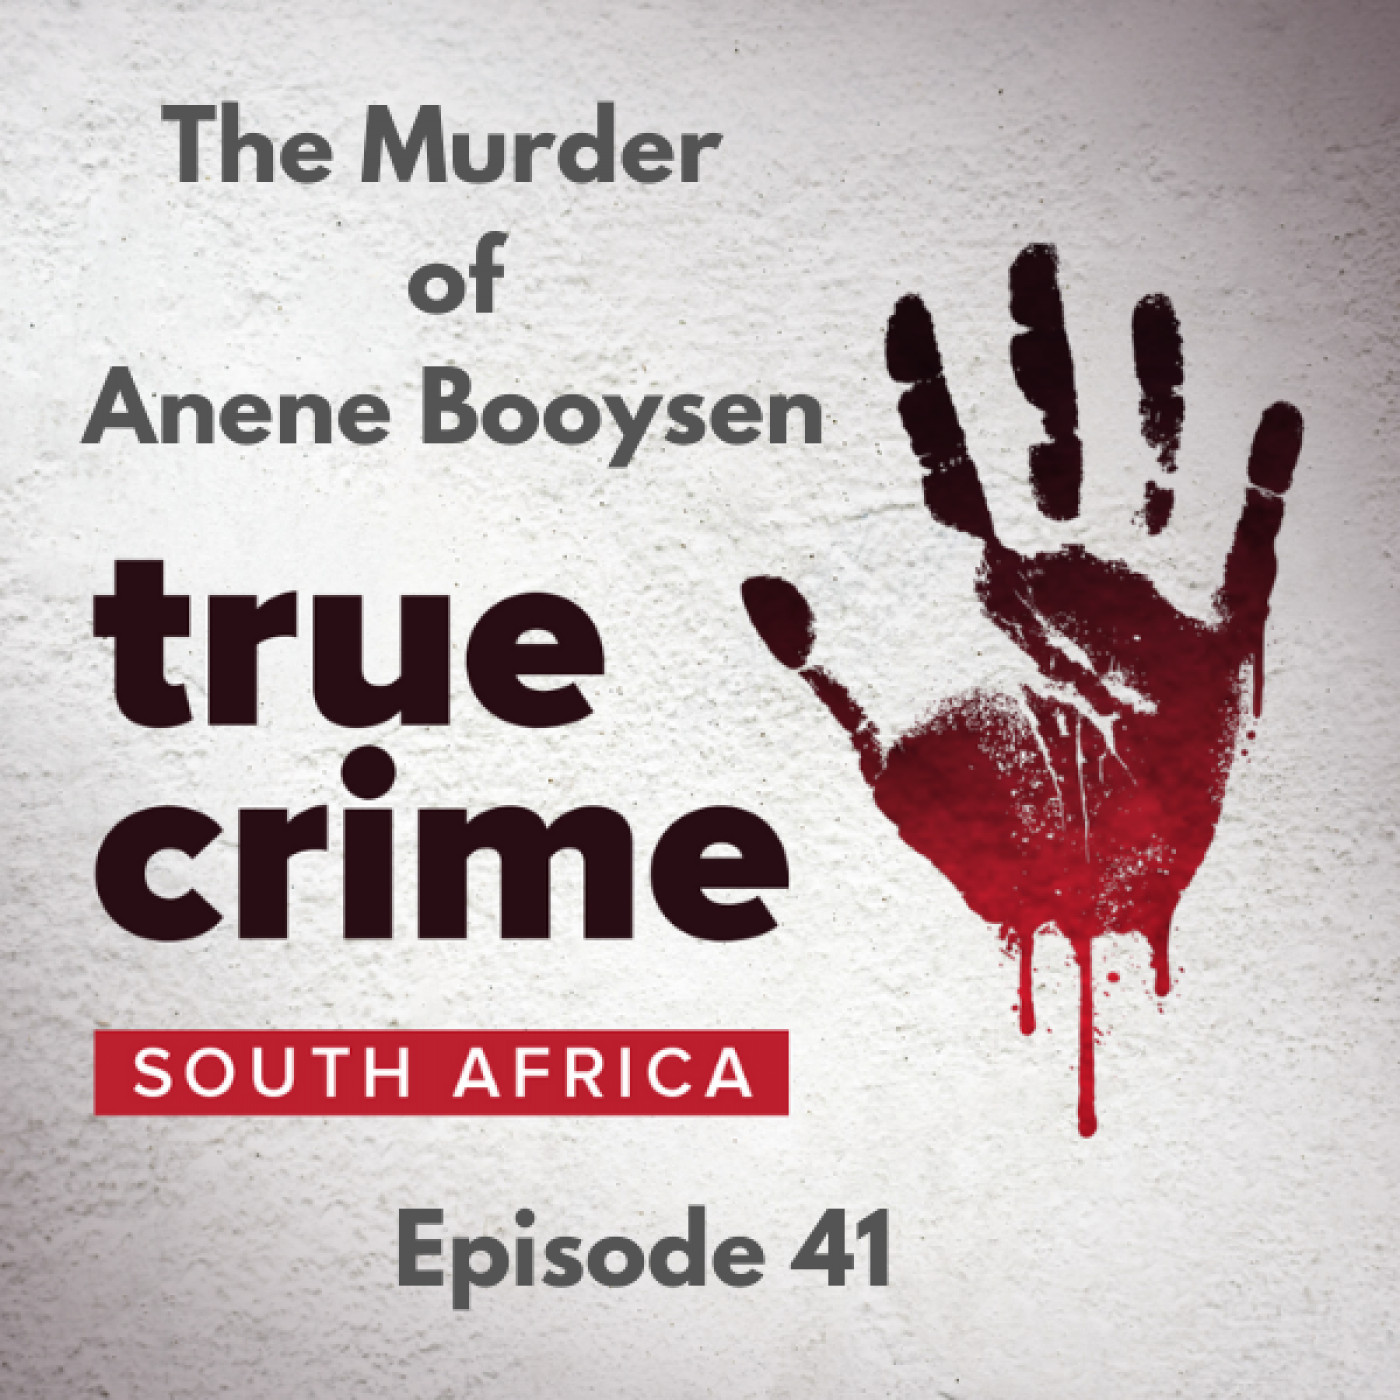 Episode 41 - The Murder of Anene Booysen